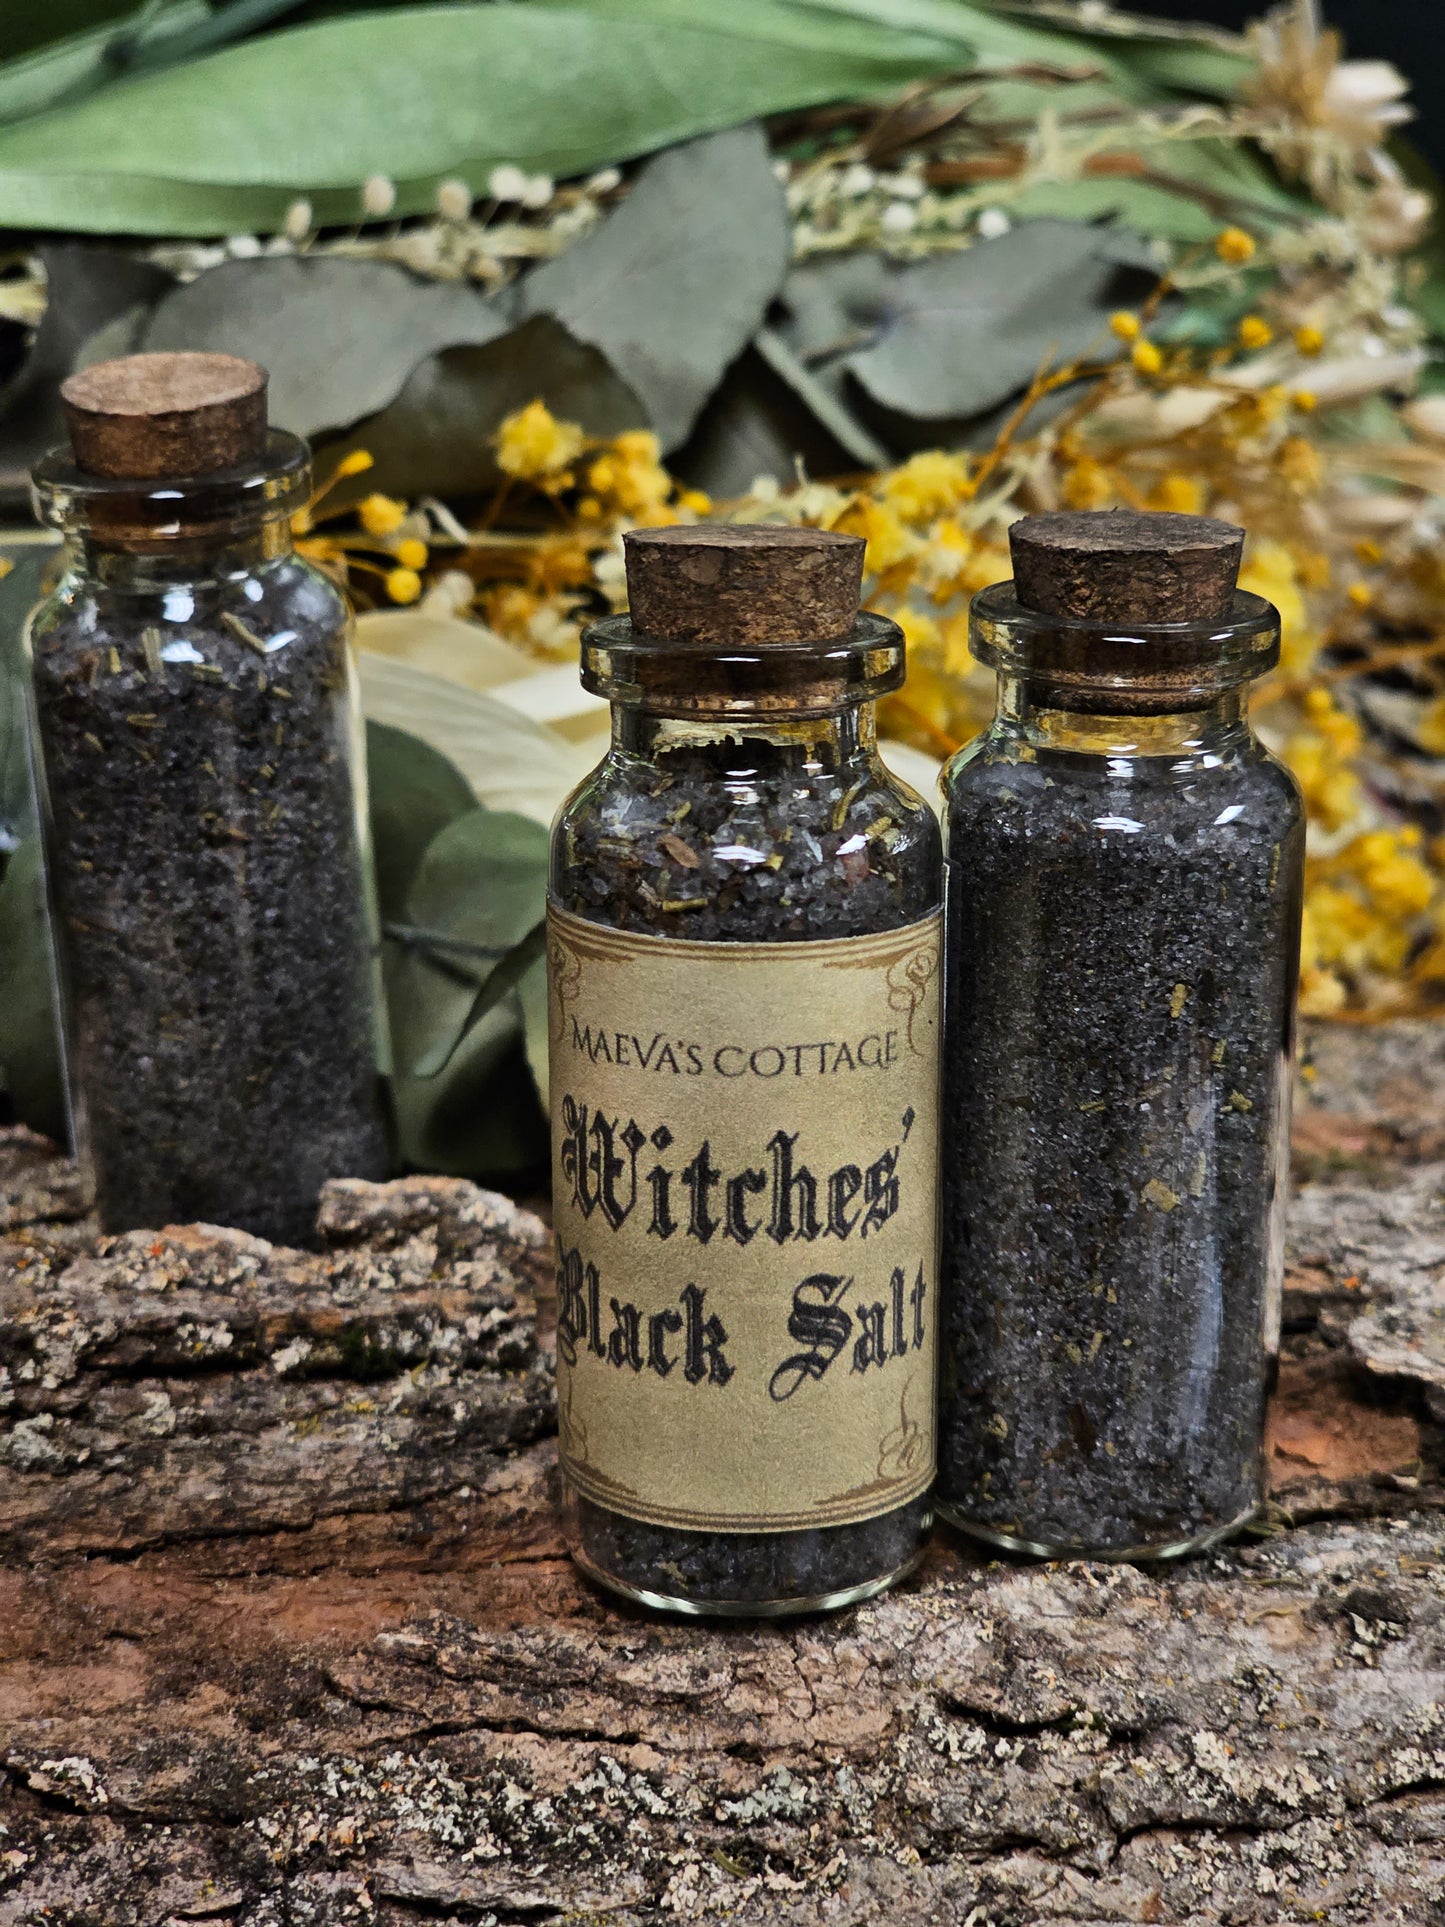 Witches' Black Salt by Maeva Moonstar